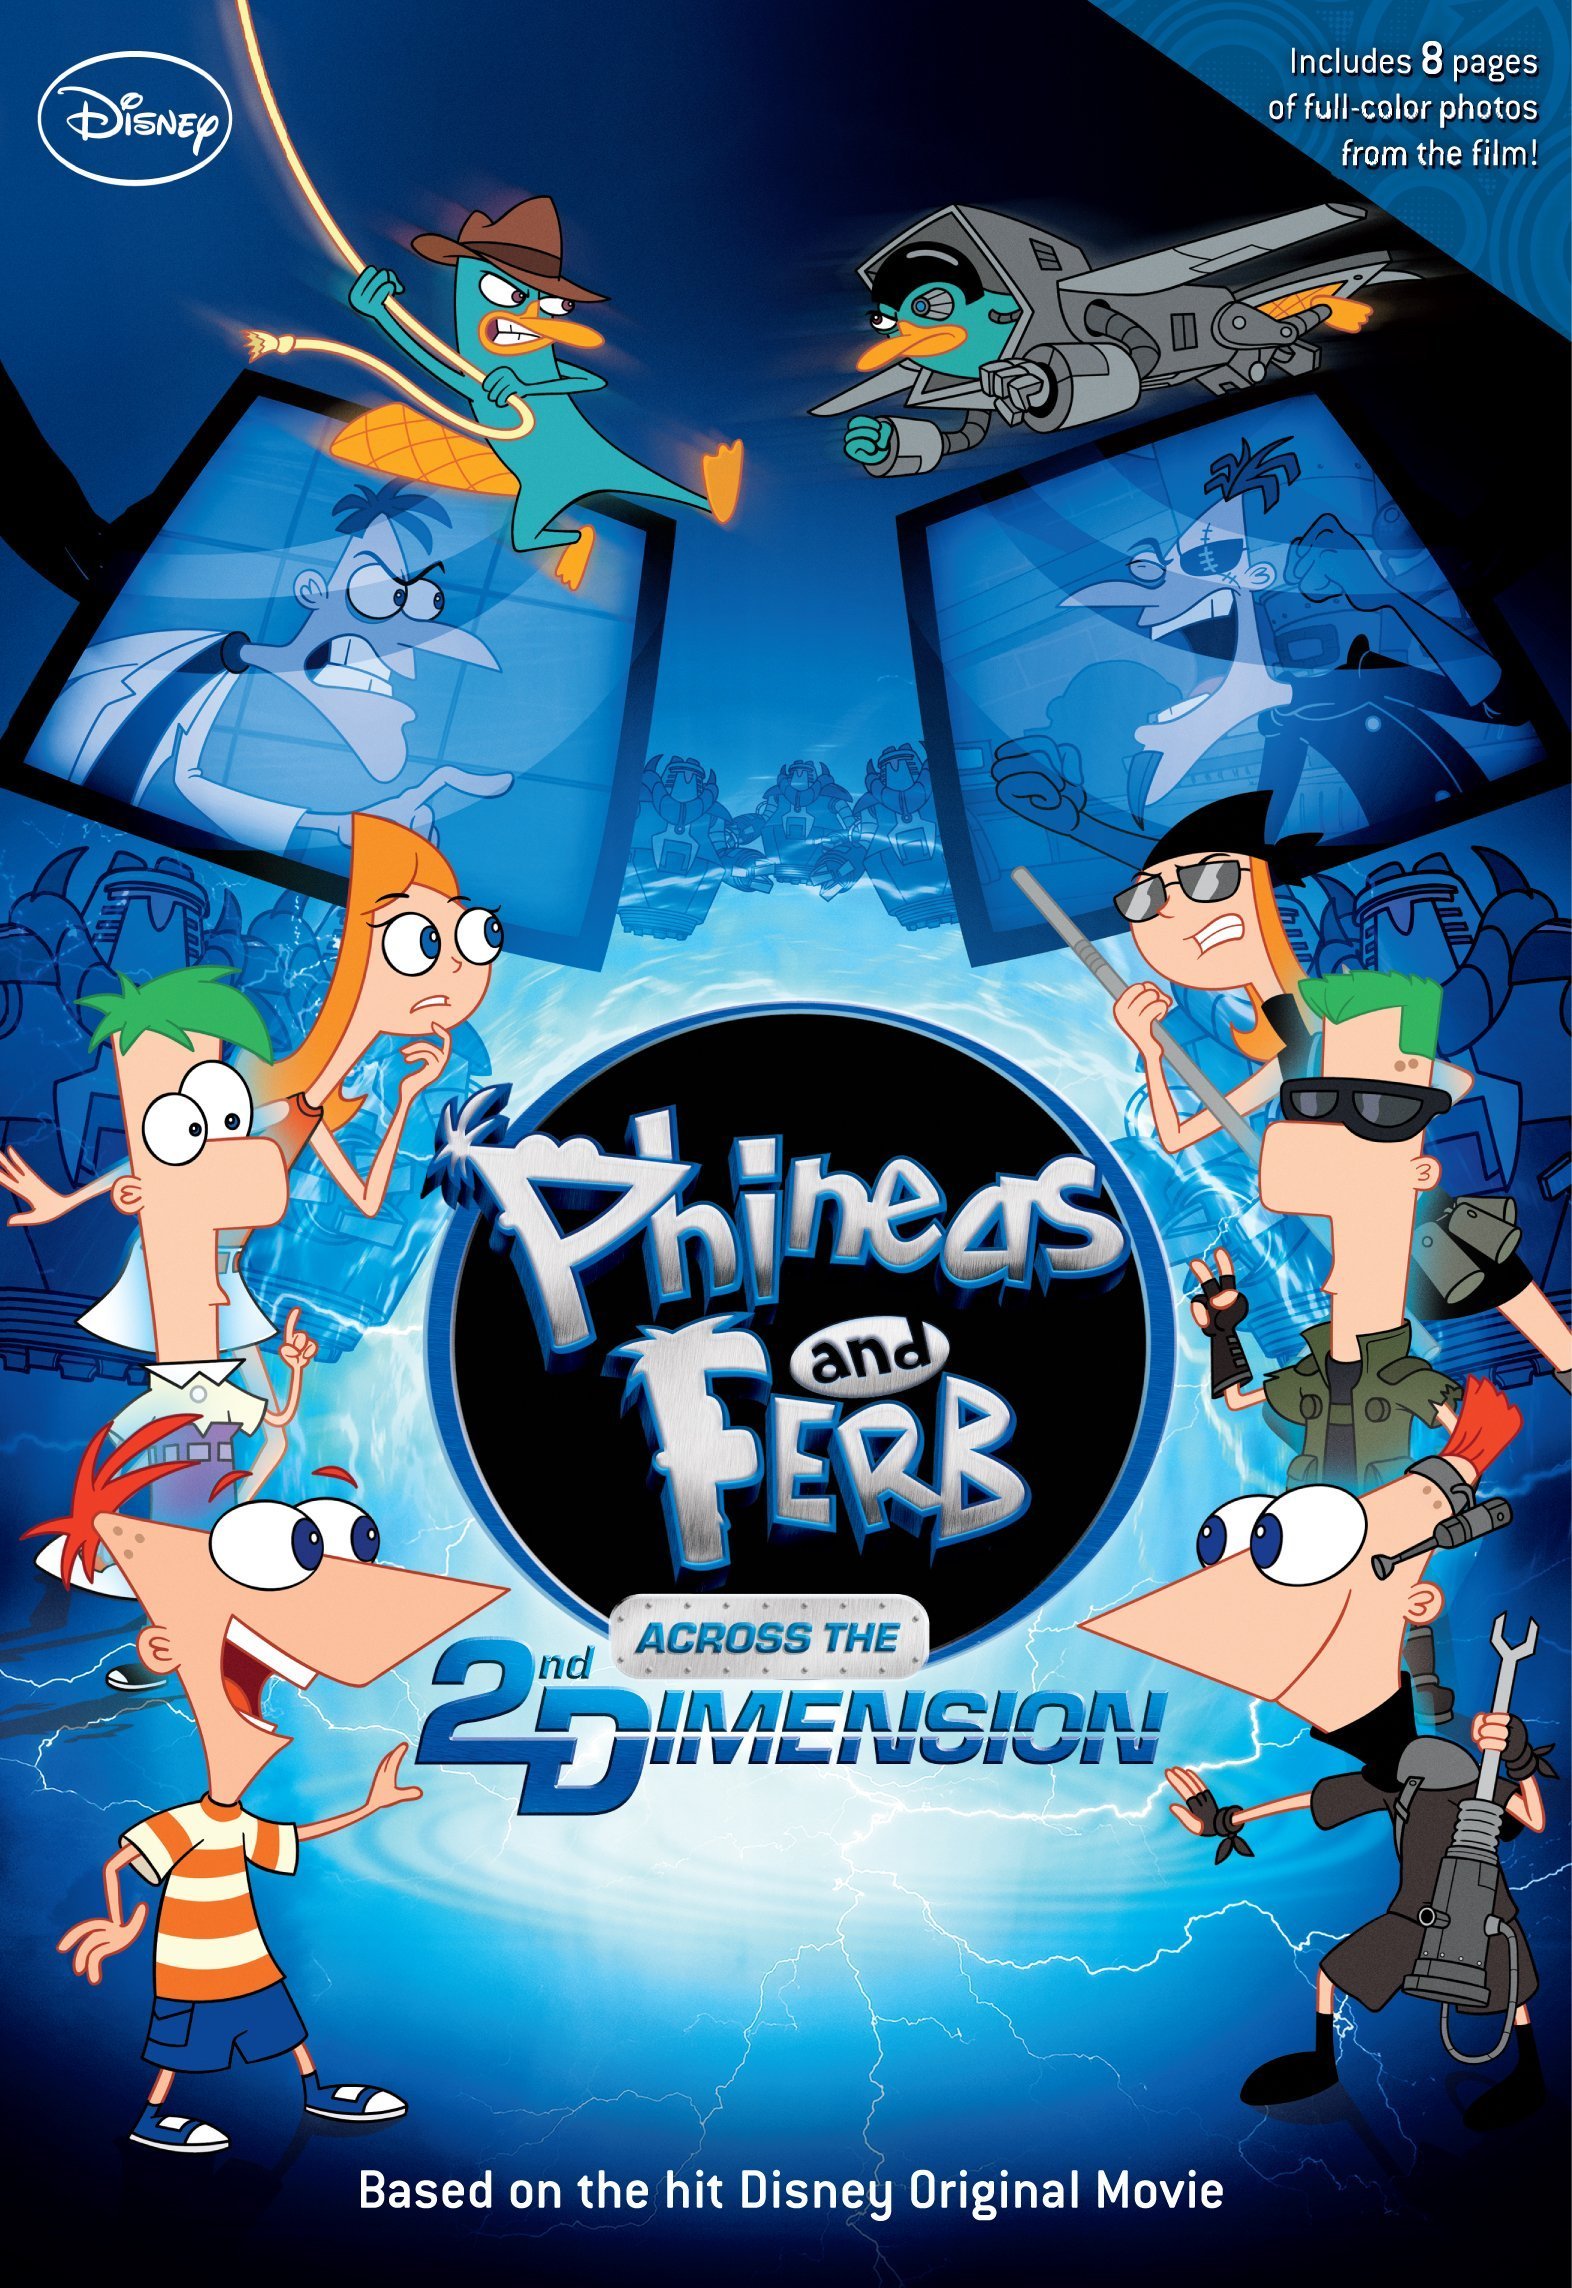 Финес и ферб покорение 2 го измерения. Финес и Ферб покорение 2 измерения. Phineas and Ferb: across the 2nd Dimension / Финес и Ферб: покорение второго измерения.